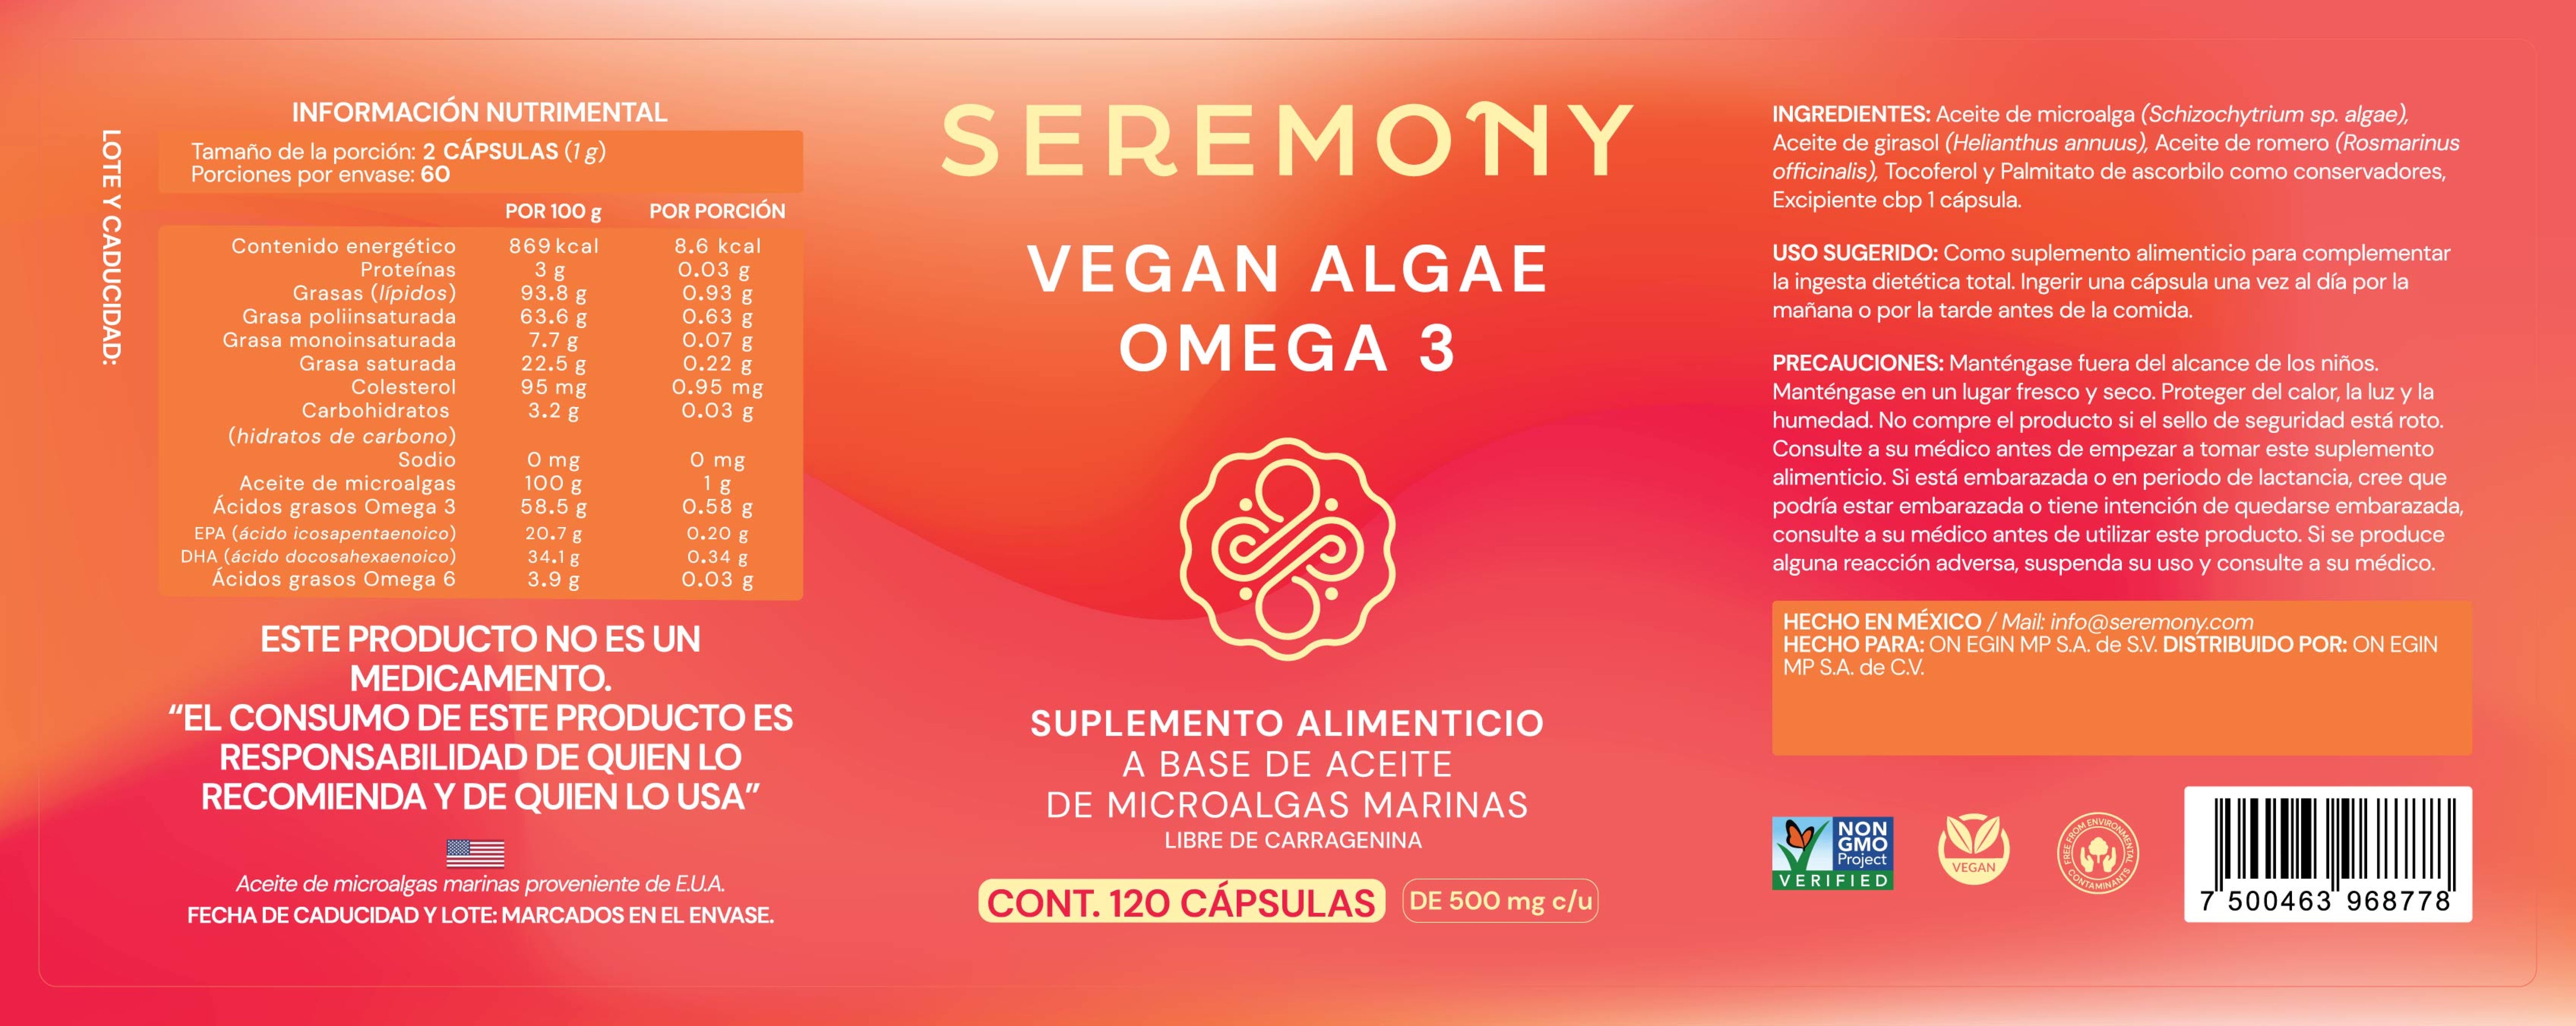 Omega 3 Vegano a Base de Aceite de Fitoplancton Marino Puro - Fuente de DHA y EPA